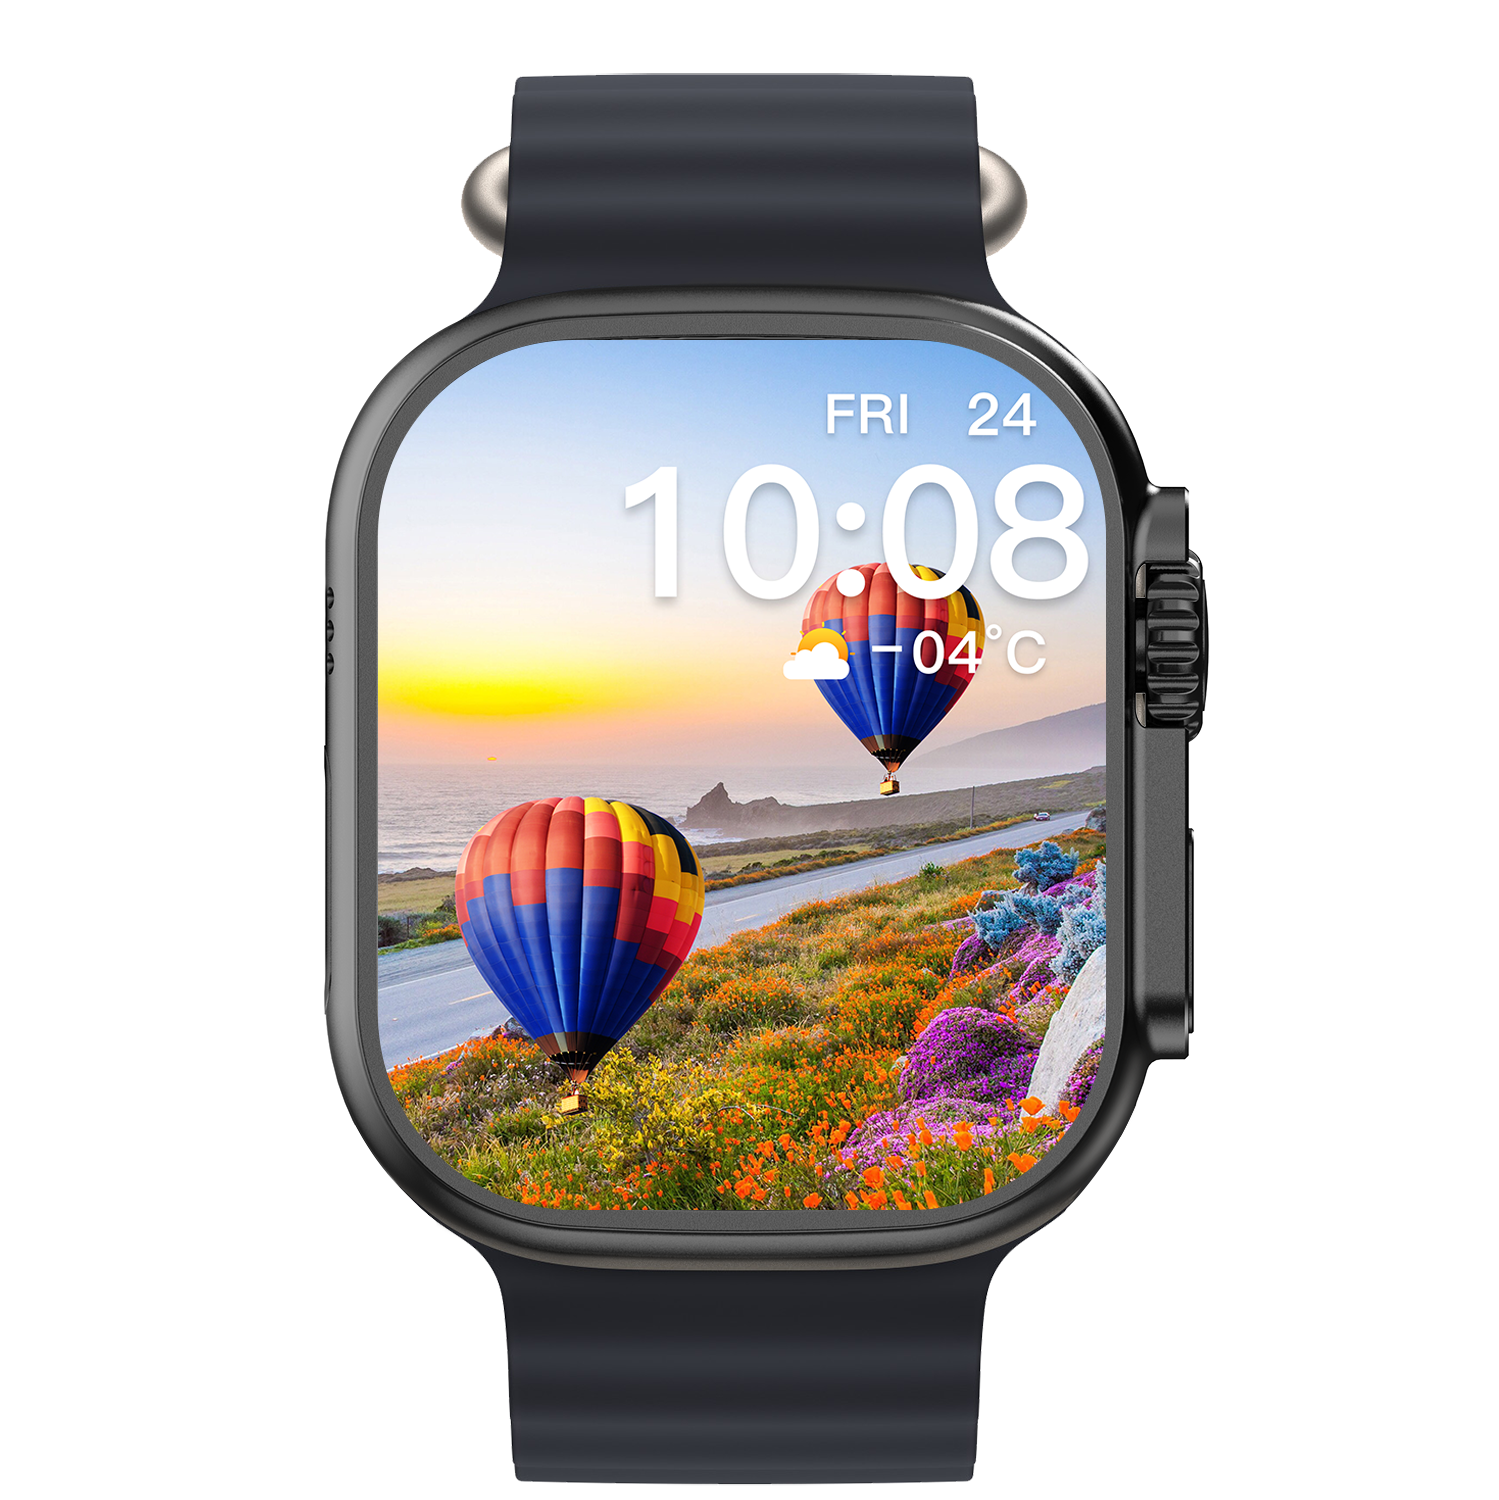 MIRUX Watch VA9 Ultra Smartwatch Silikon, Aktivitätstracker 2 NFC SW Schwarz BT-Anruf